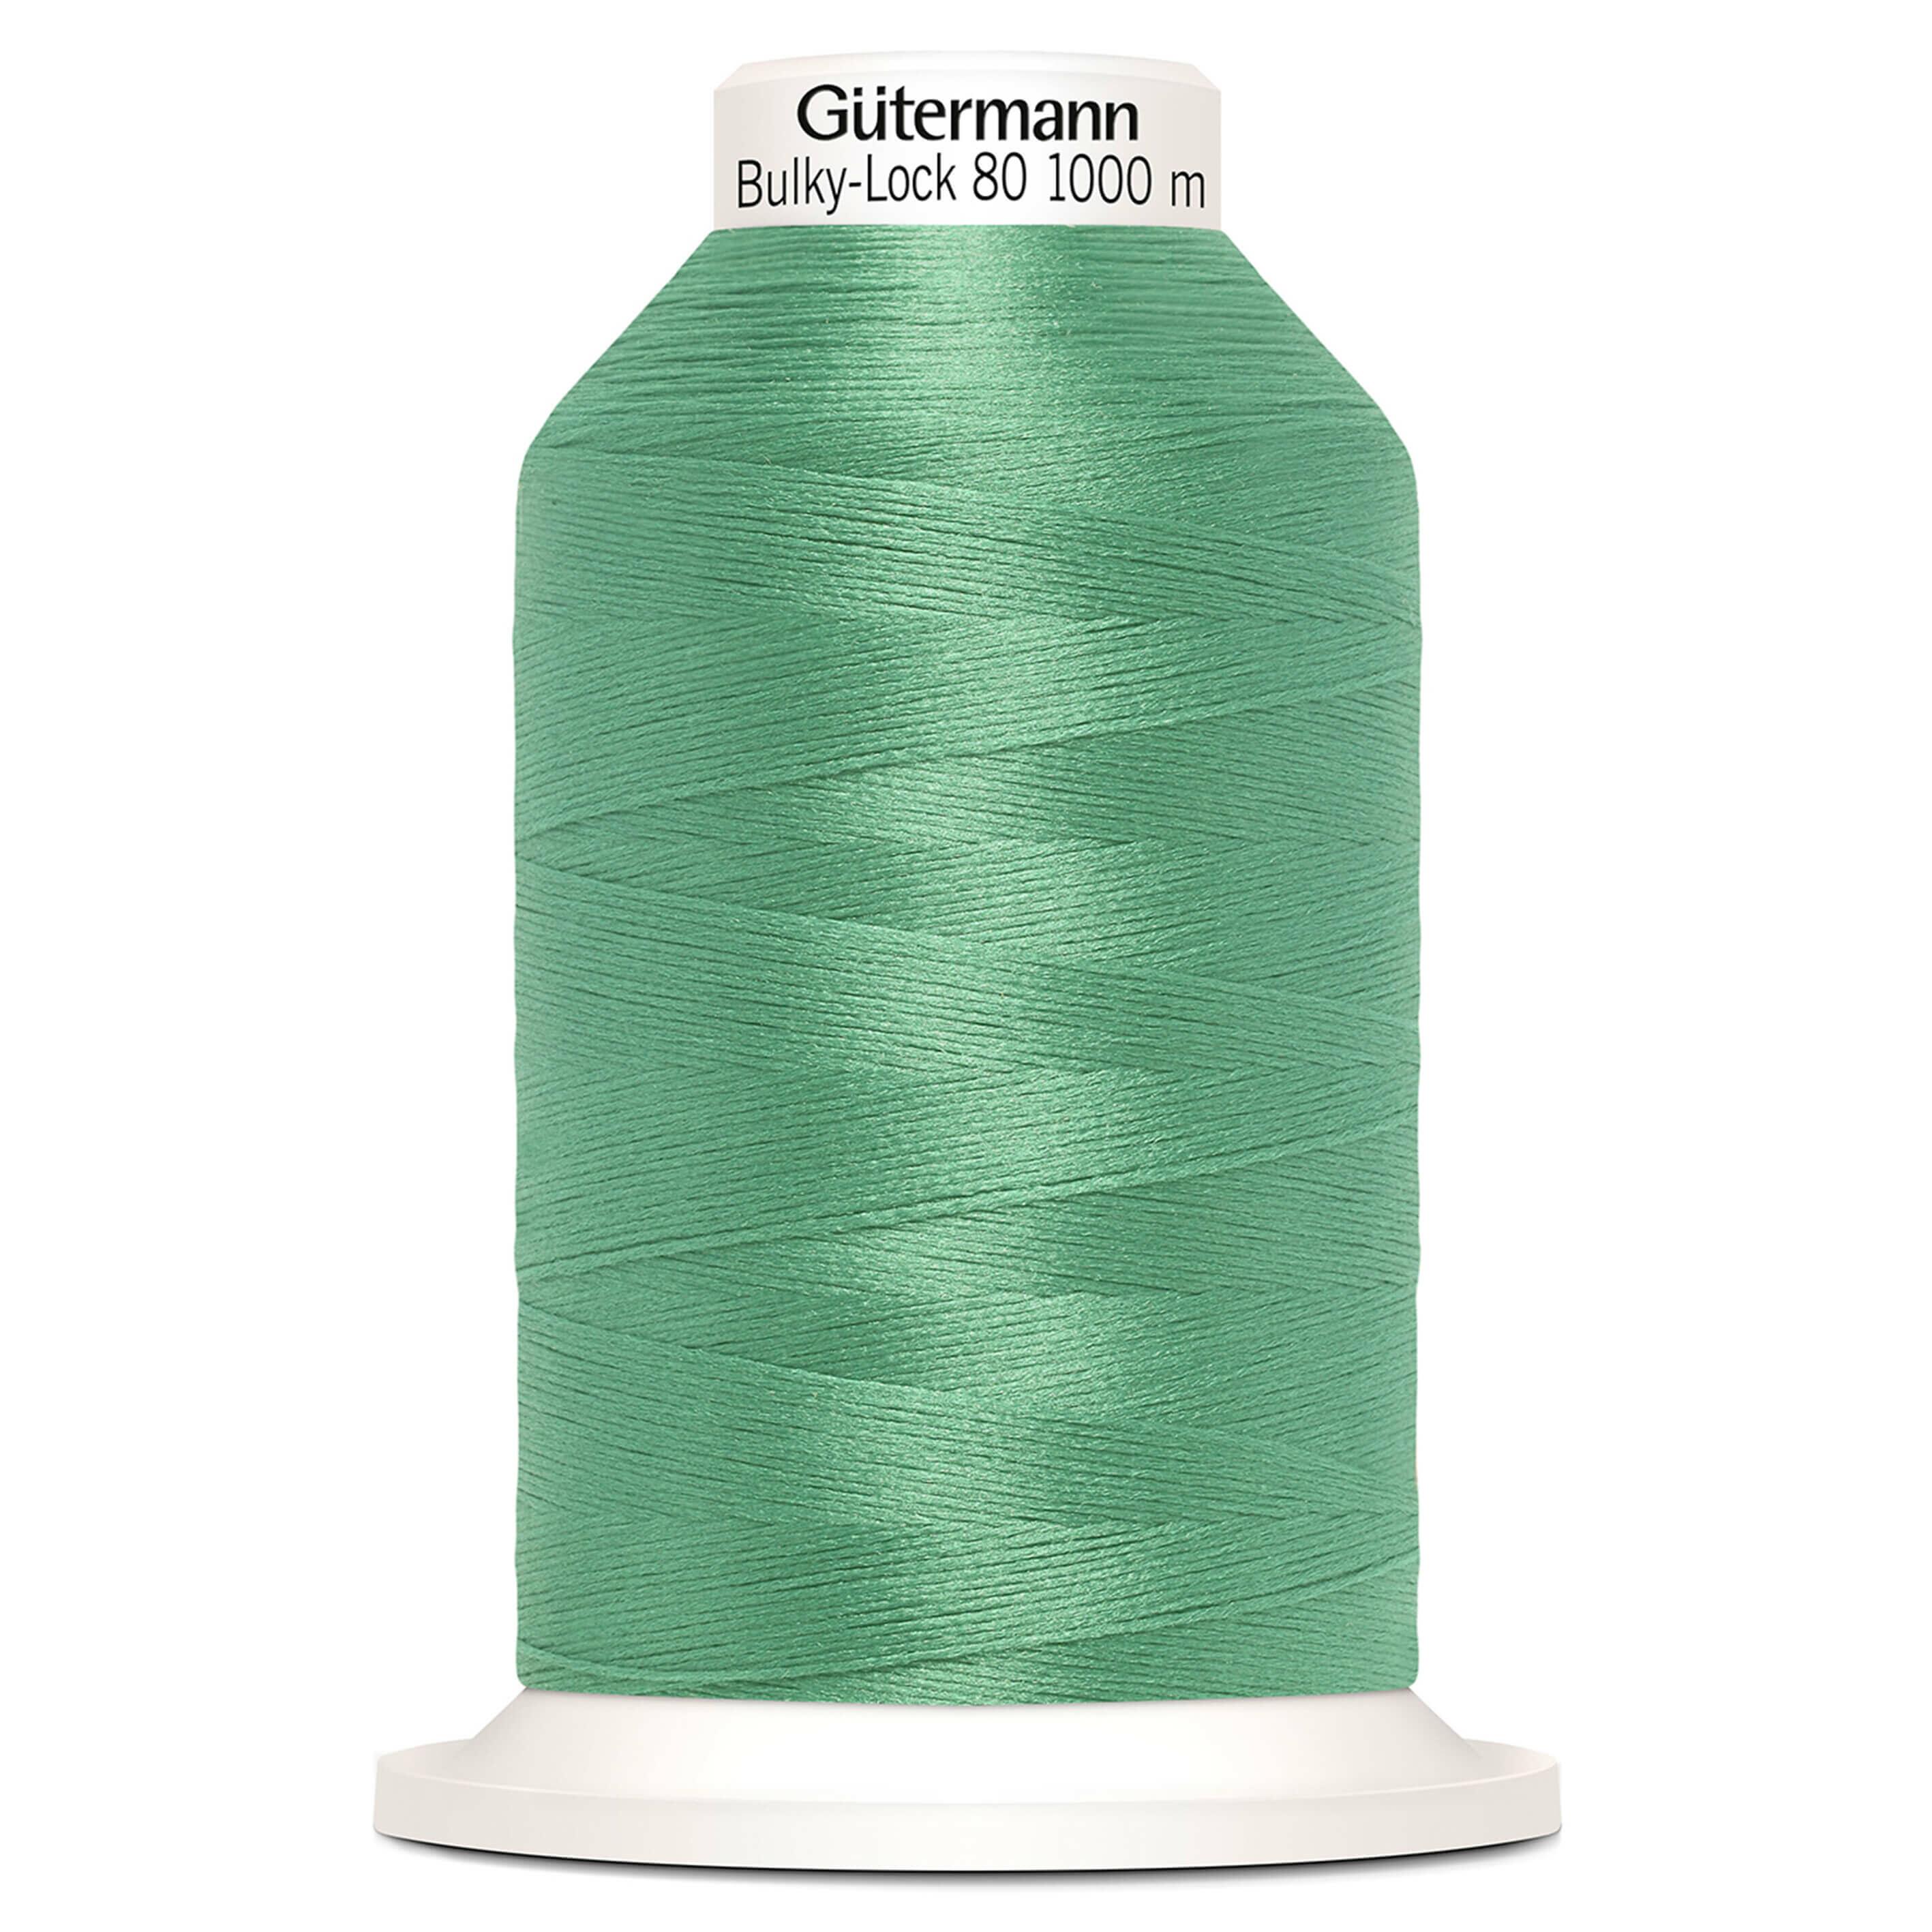 Gutermann Bulky Lock 80 overlocking thread in colour 235 Sea Green